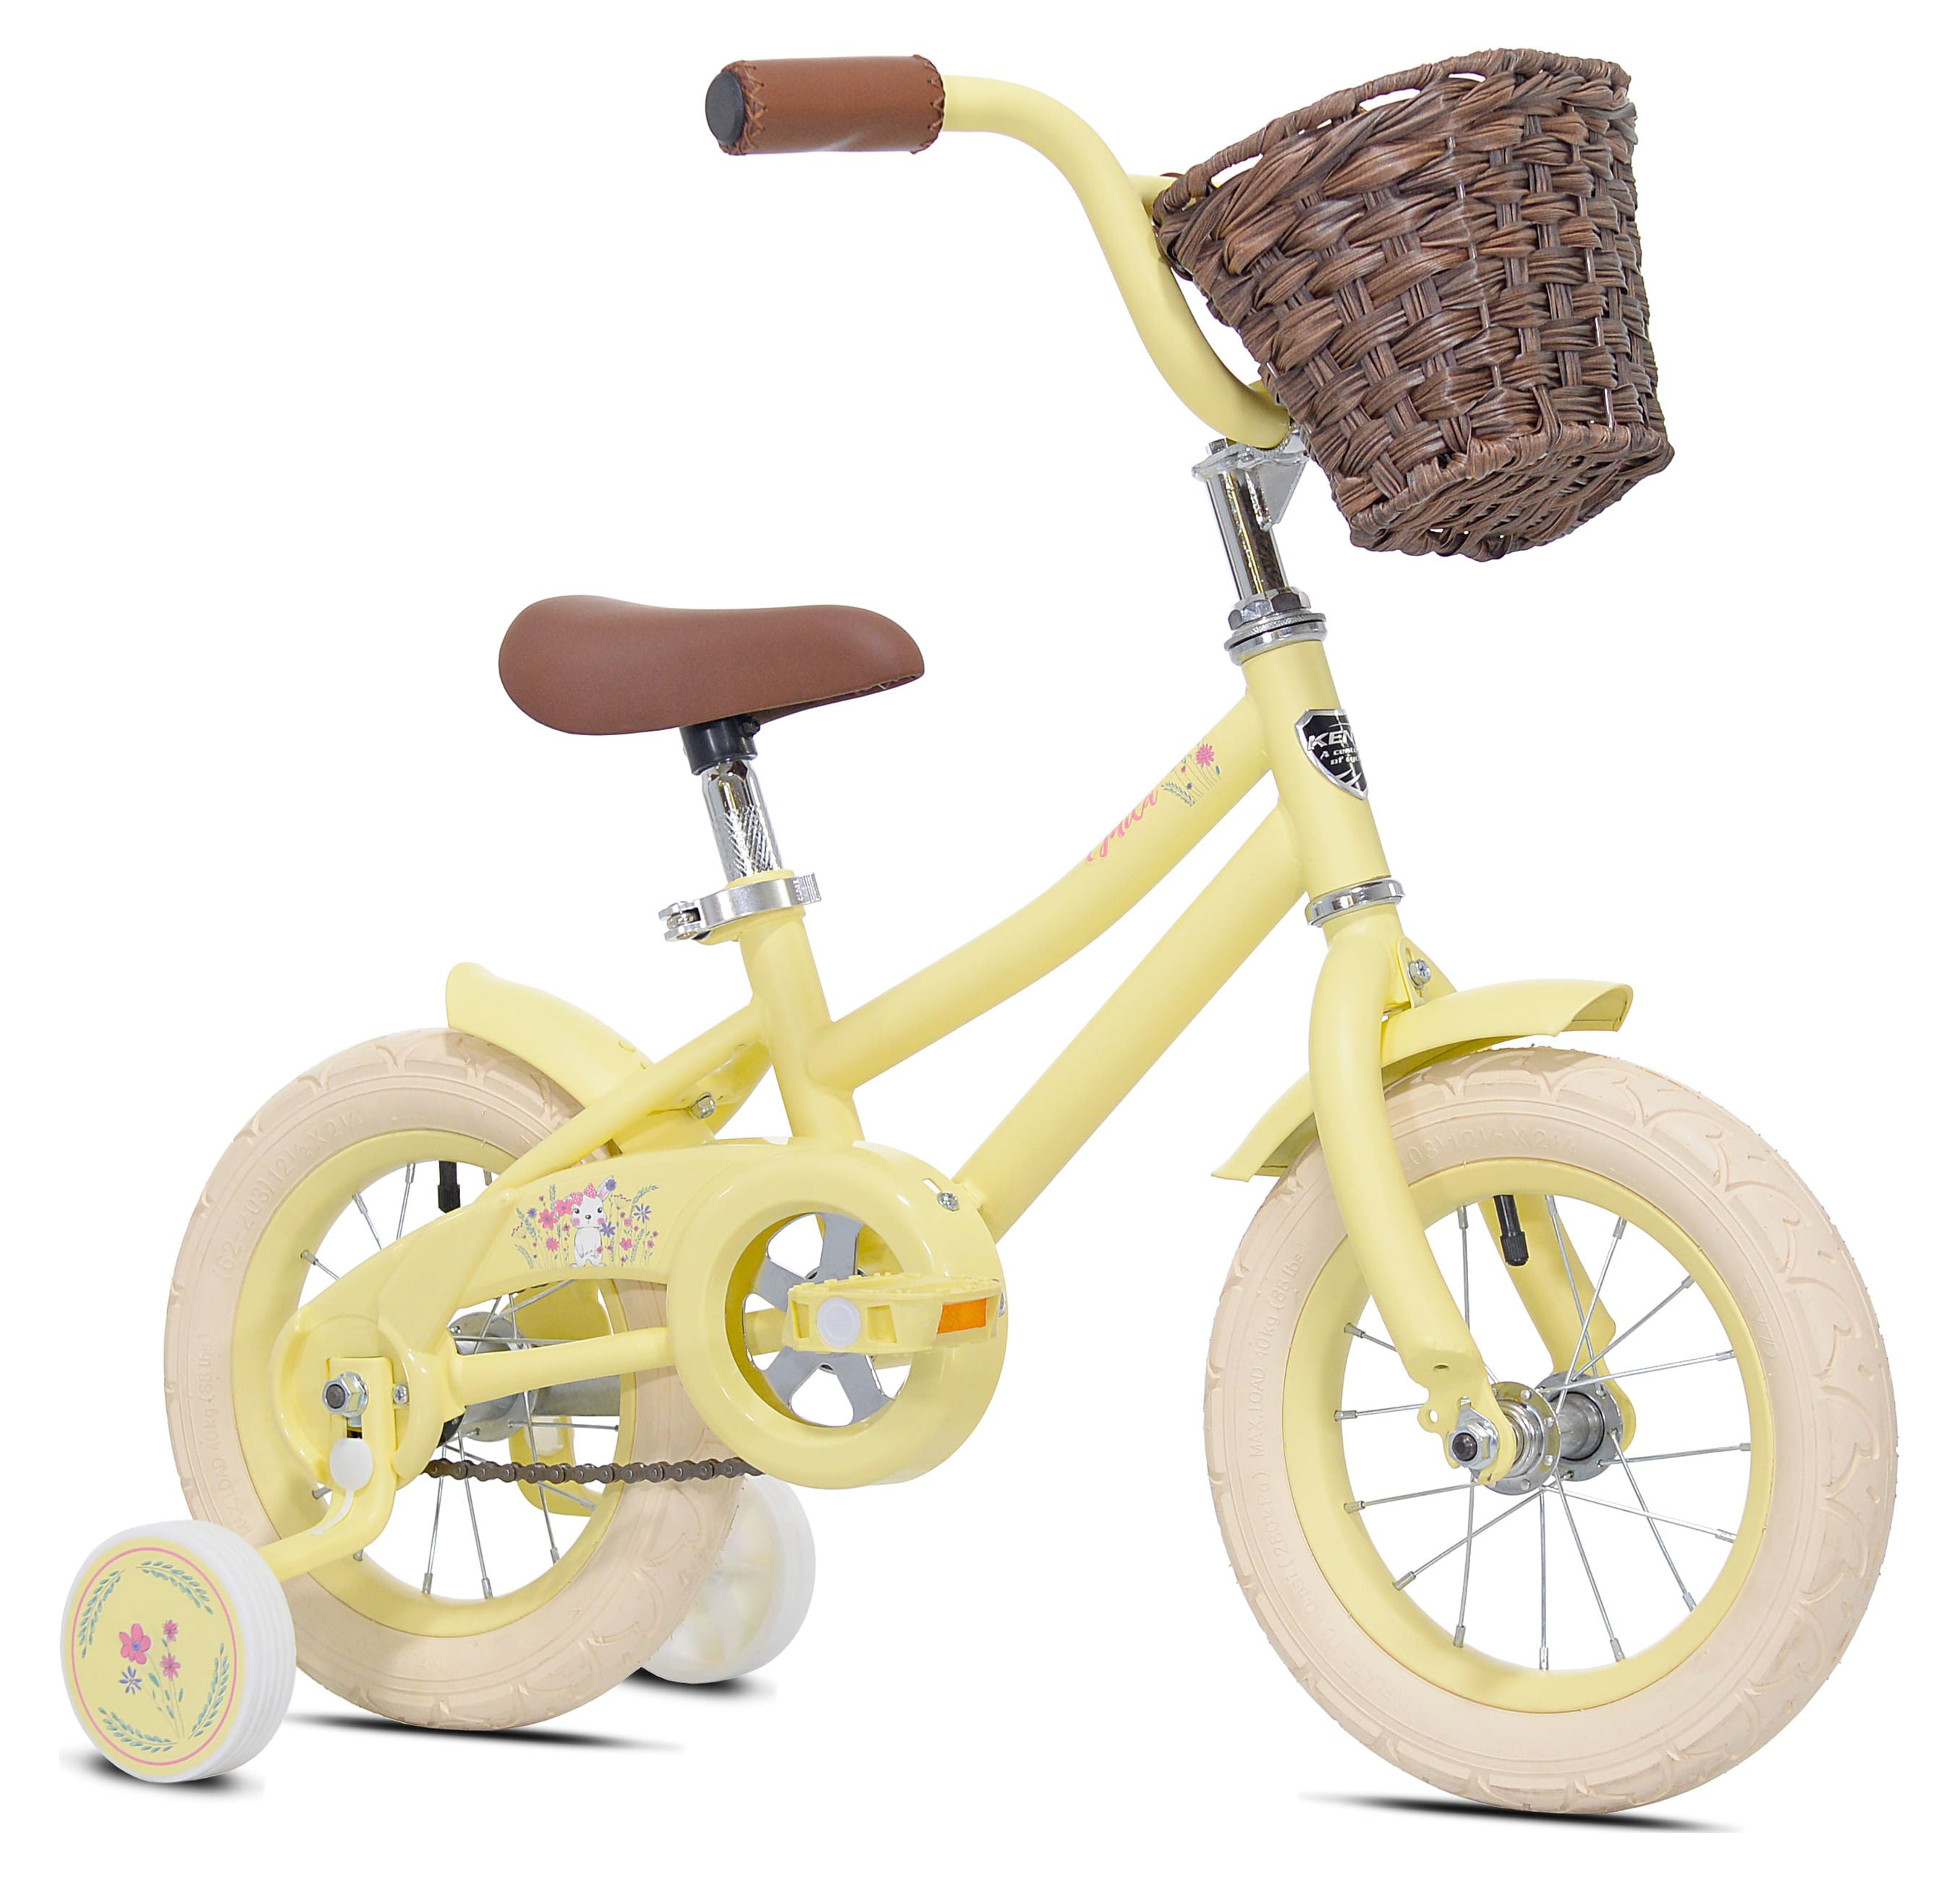 Myland b02000005 bicicleta kid 201 nina 20 6 8 anos 1s amarillo Bicic